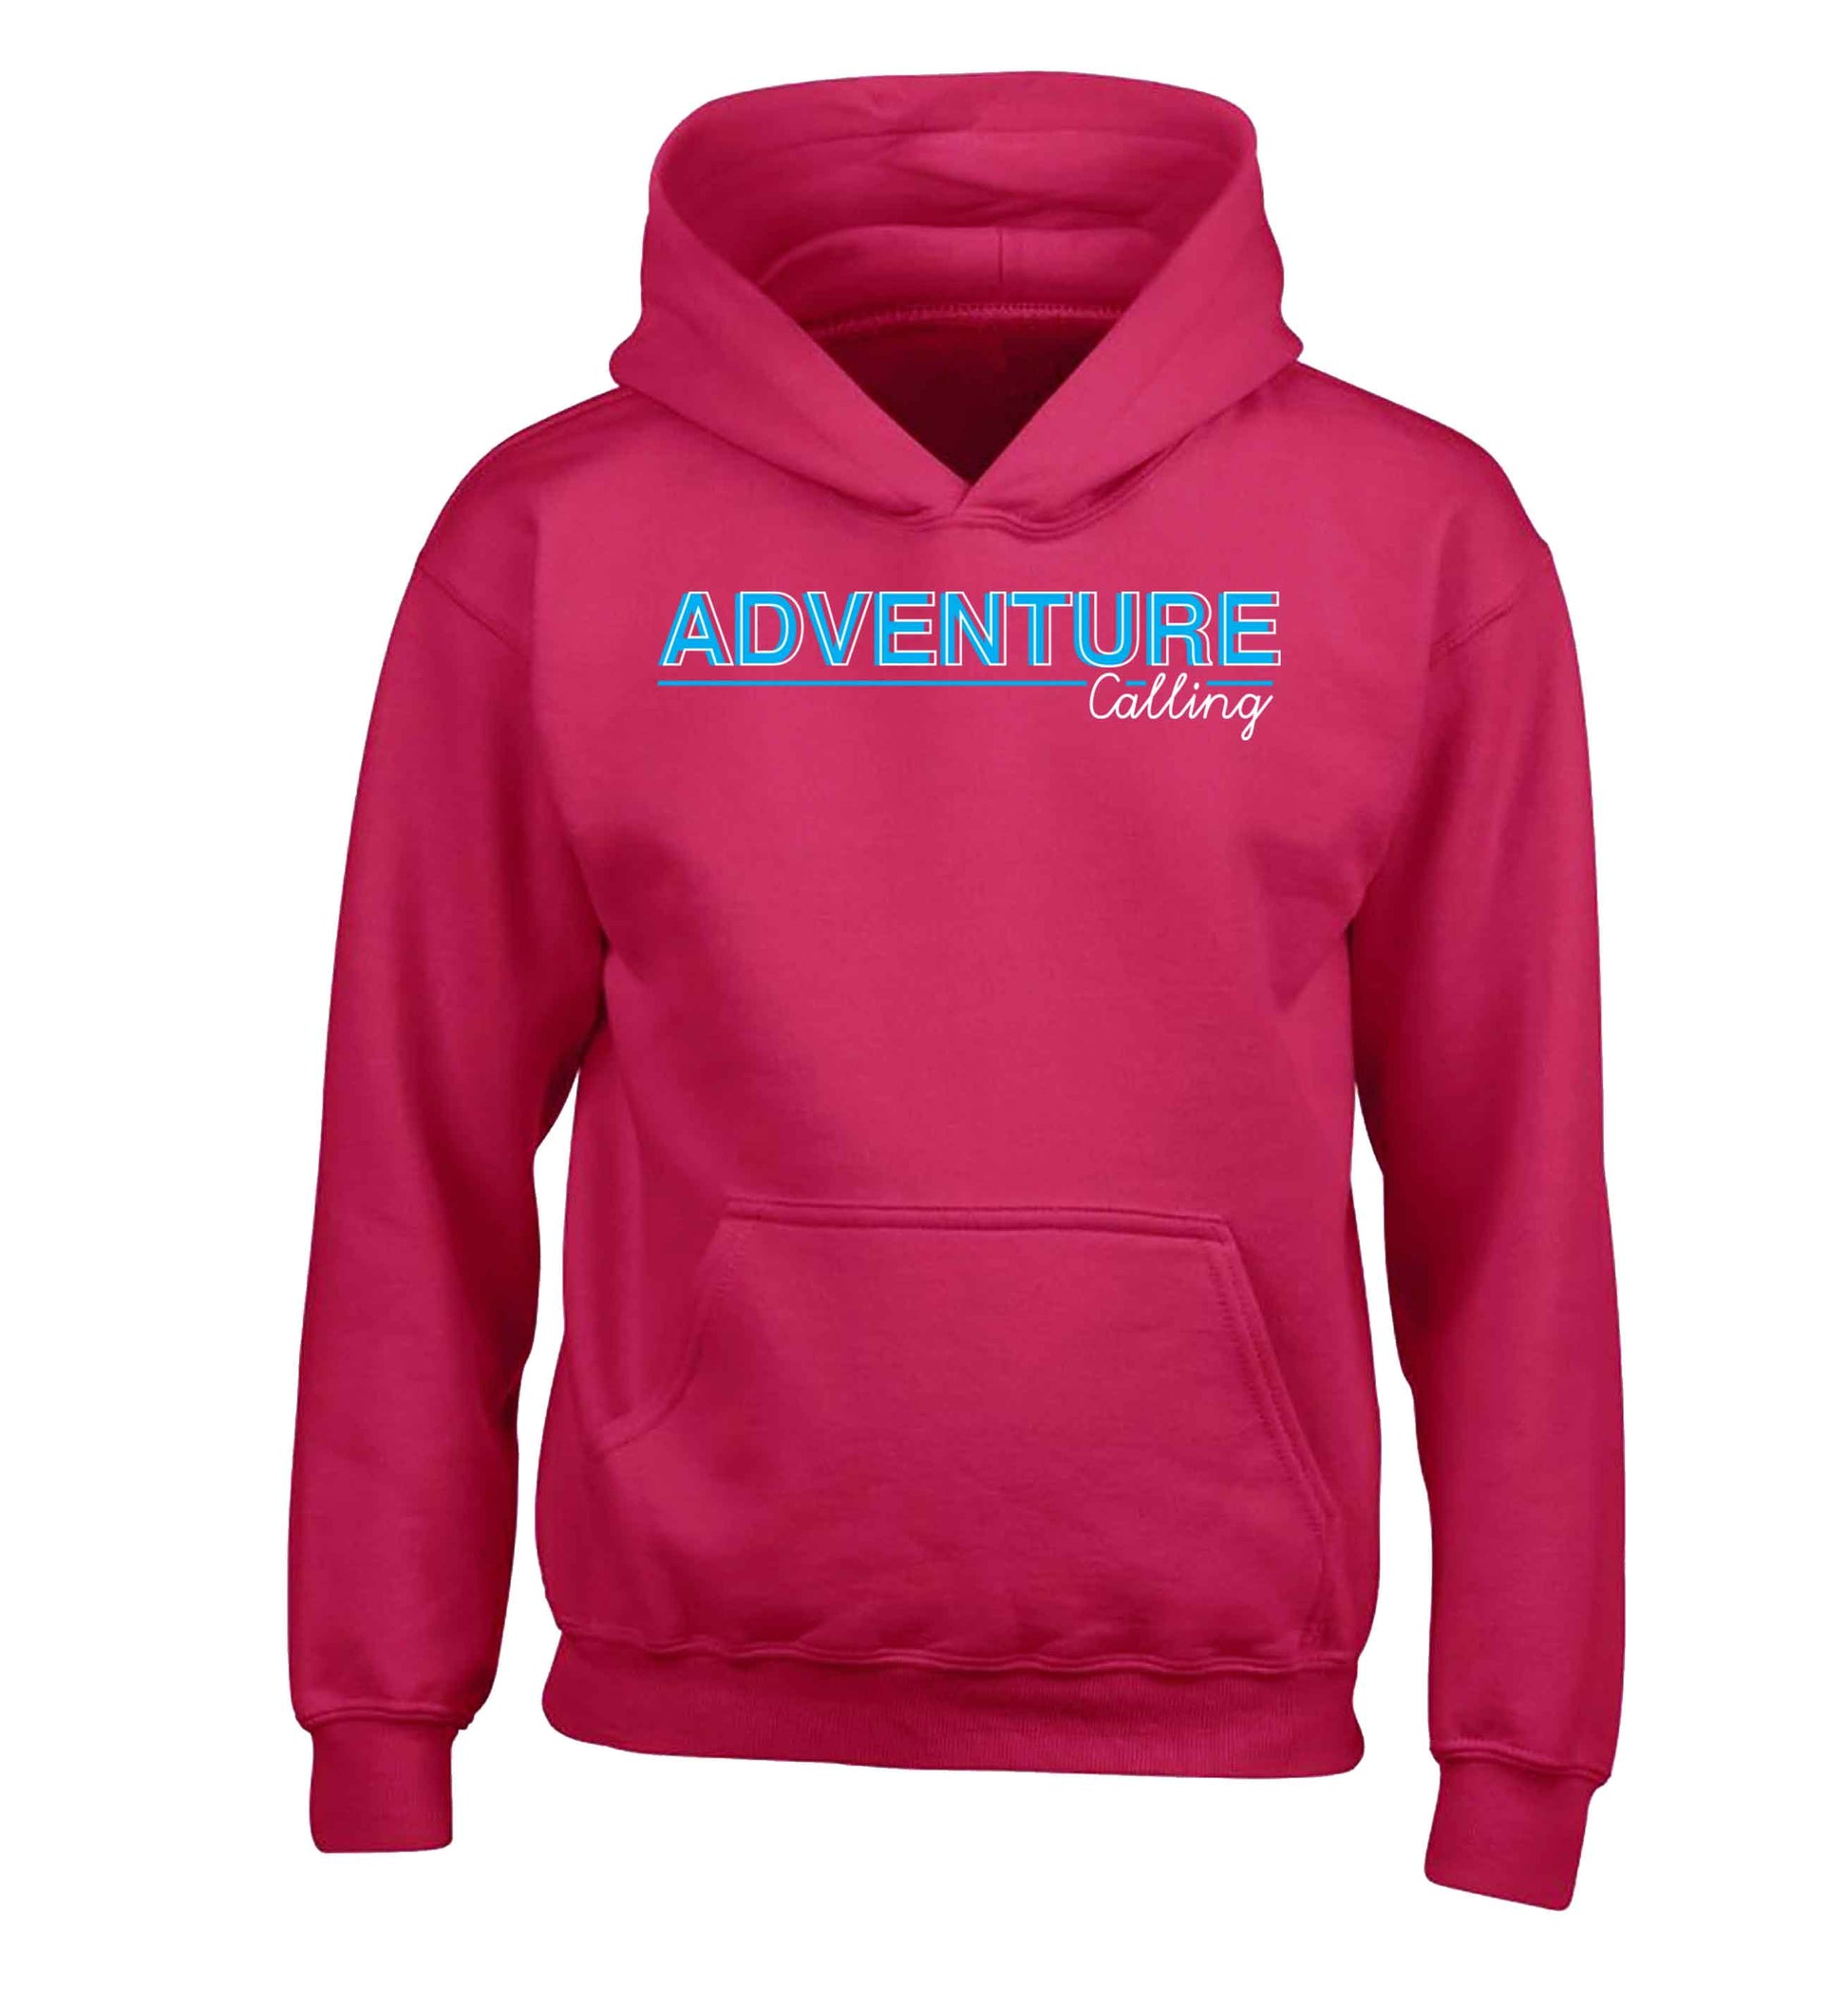 Adventure calling children's pink hoodie 12-13 Years